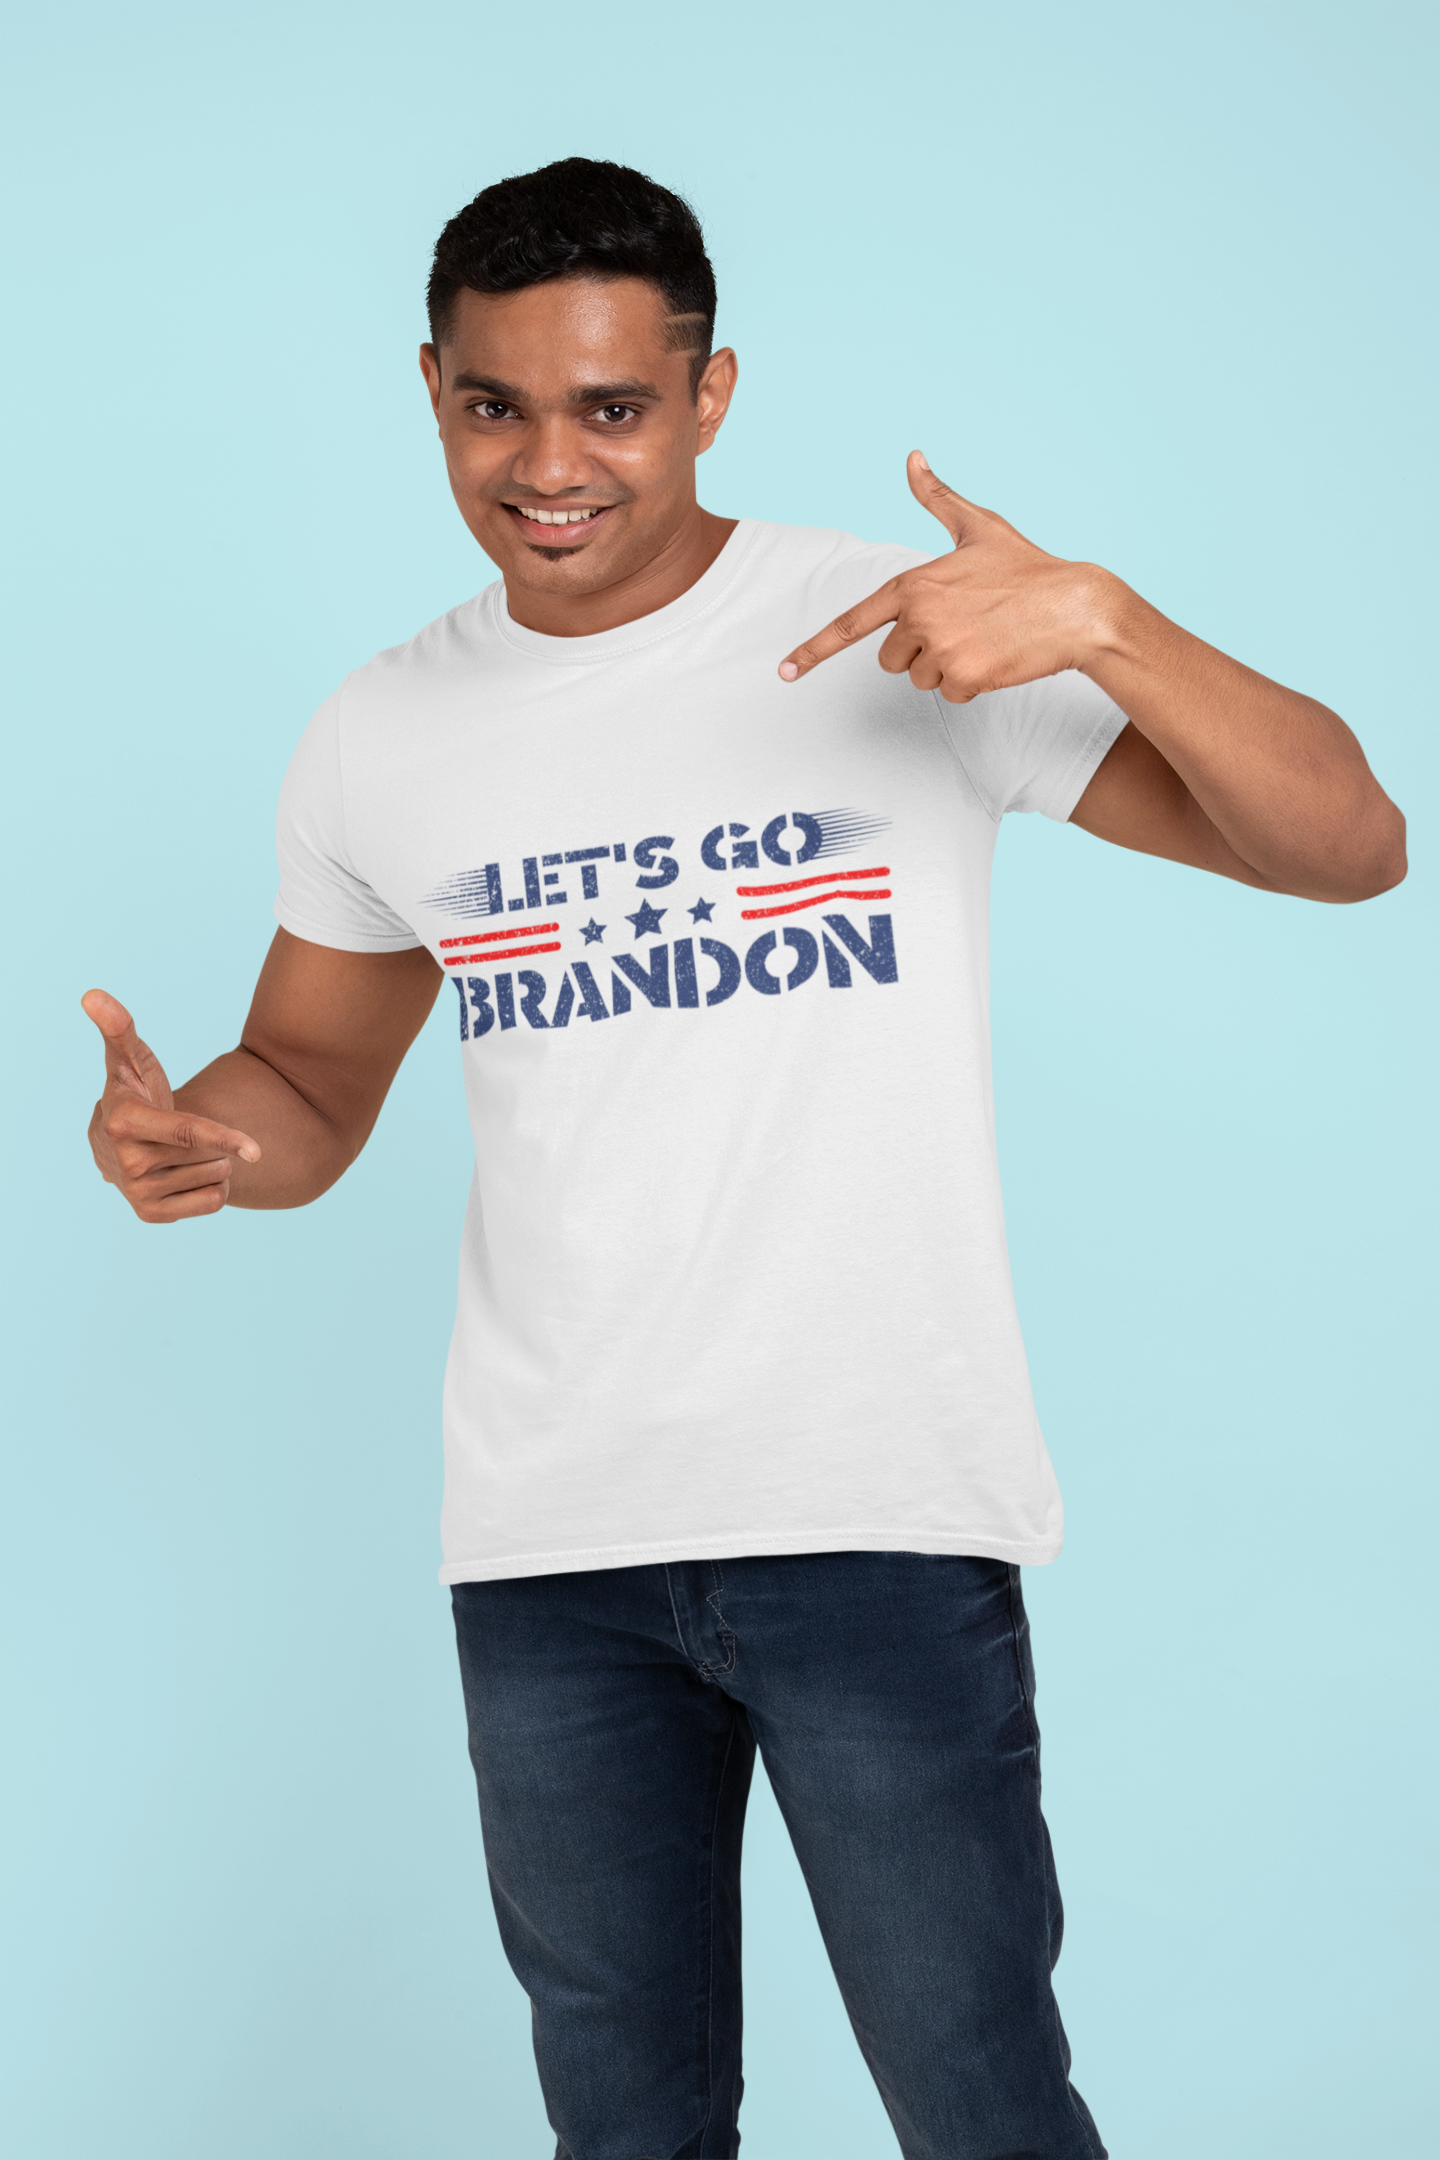 Let's Go Brandon Tee